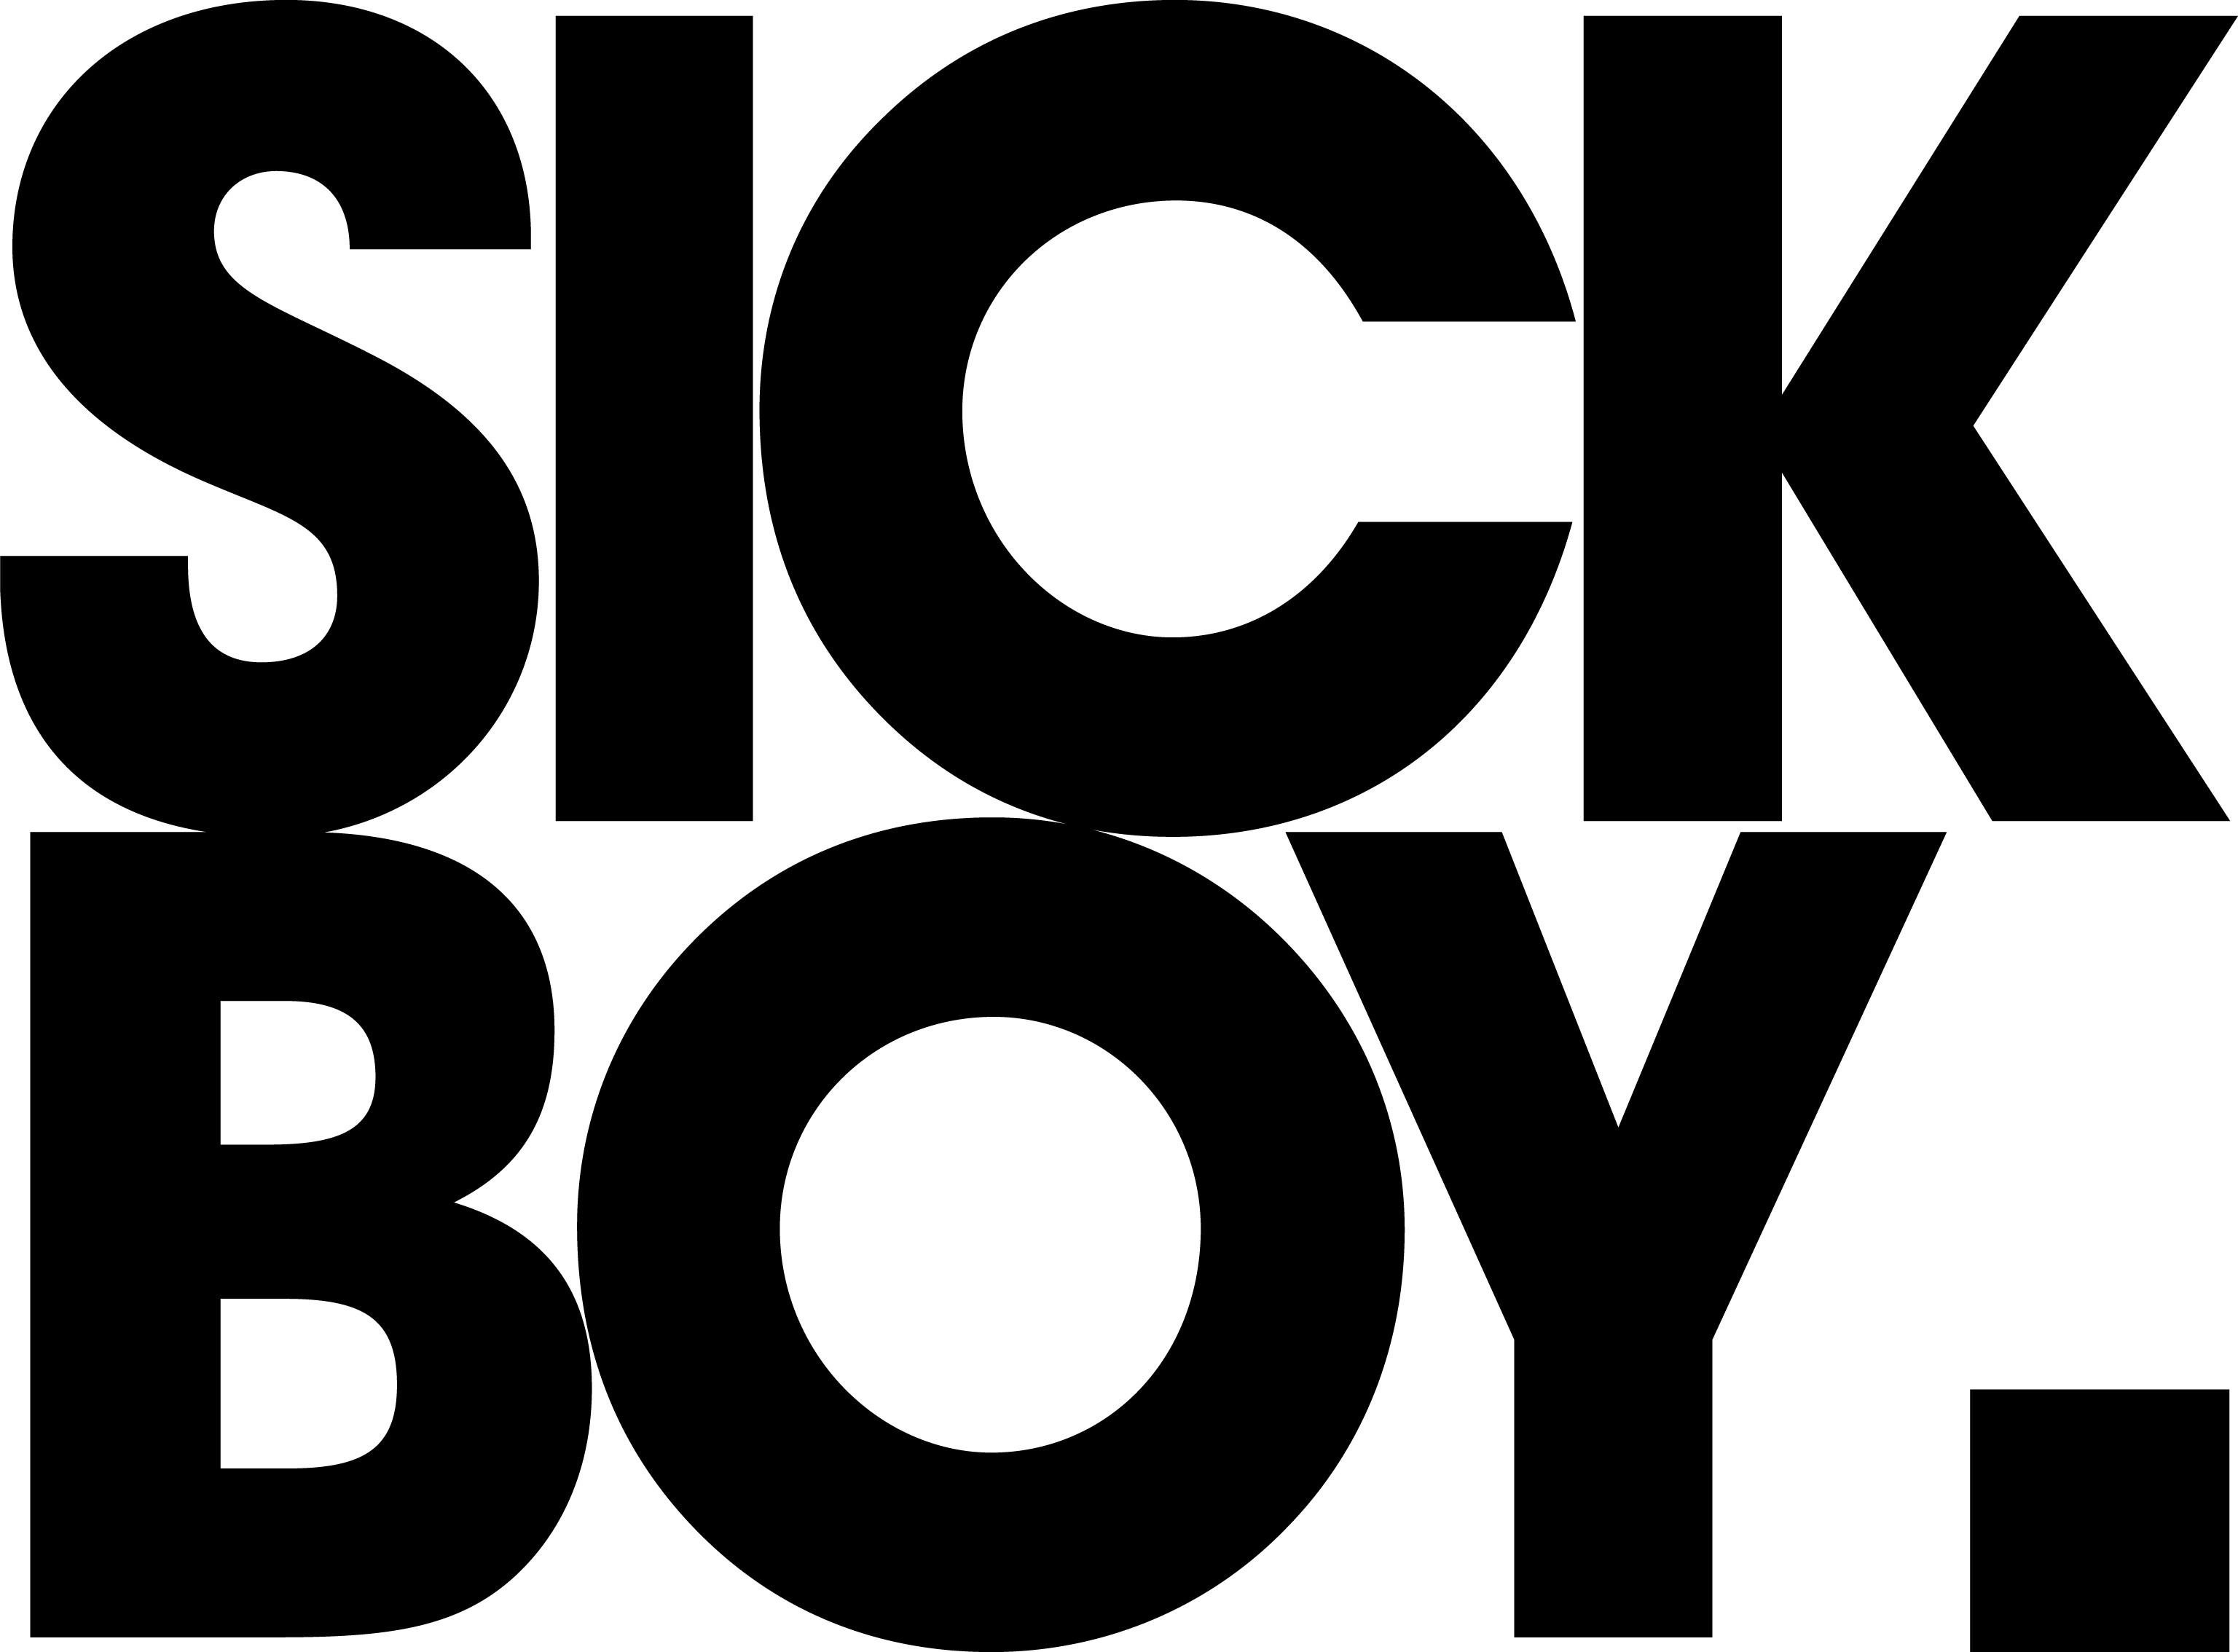 Sick Logo - Privacy Policy